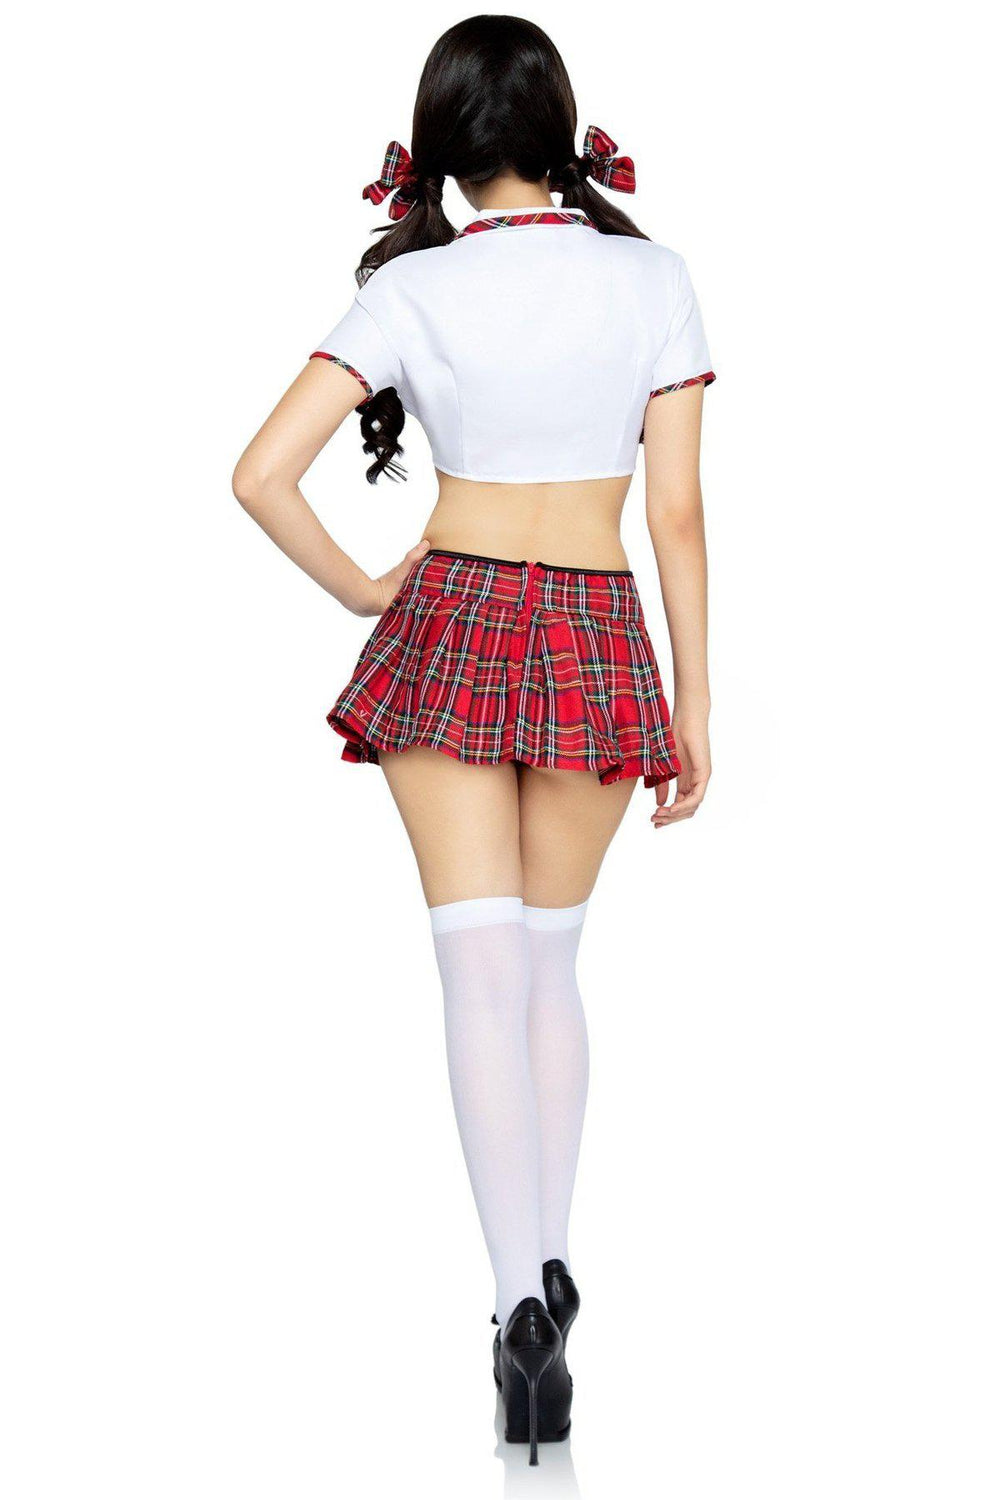 Miss Prep School Girl Costume-School Girl Costumes-Leg Avenue-SEXYSHOES.COM